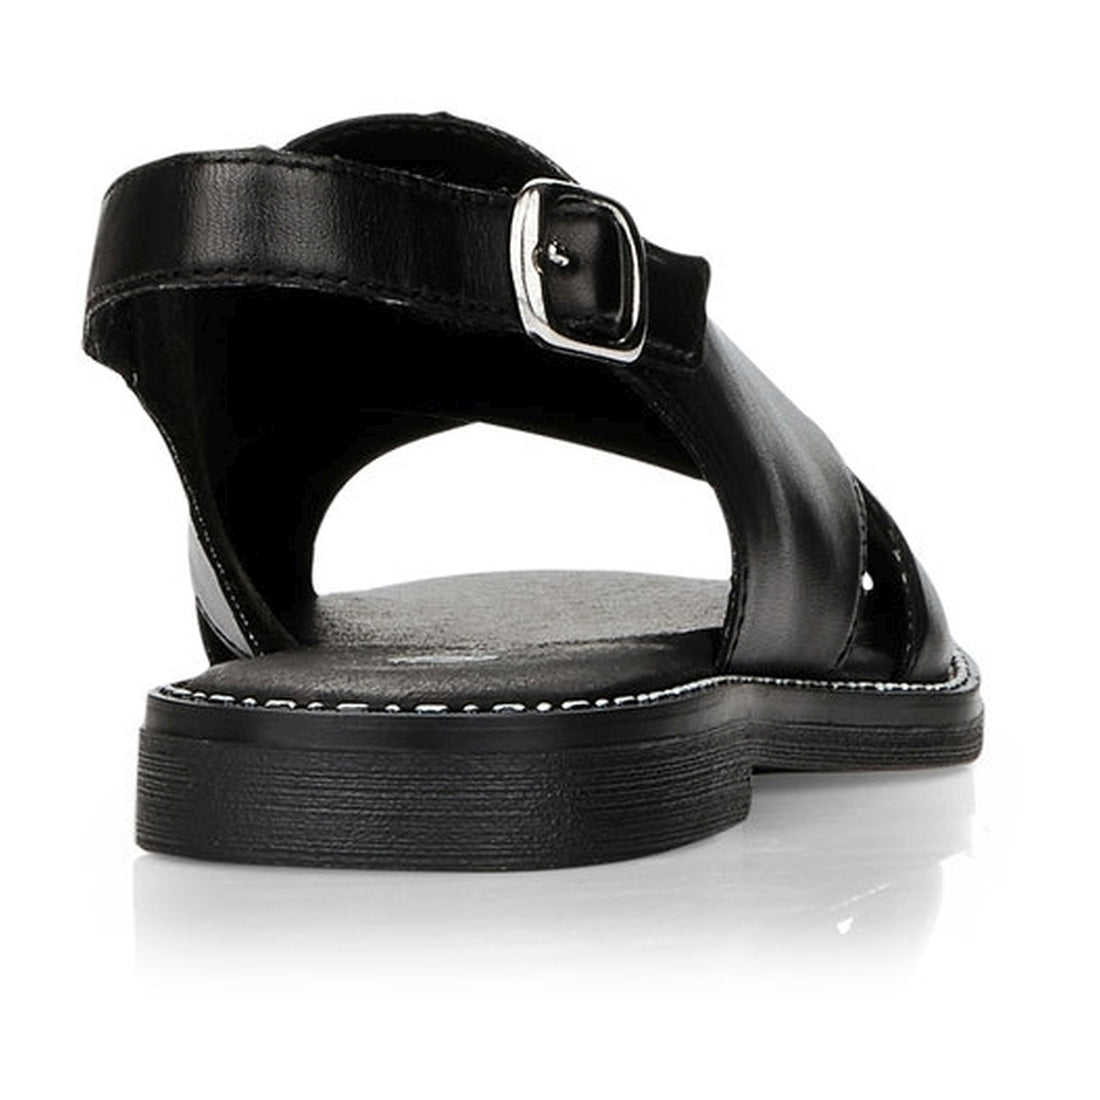 Remonte Womens black casual open sandals | Vilbury London